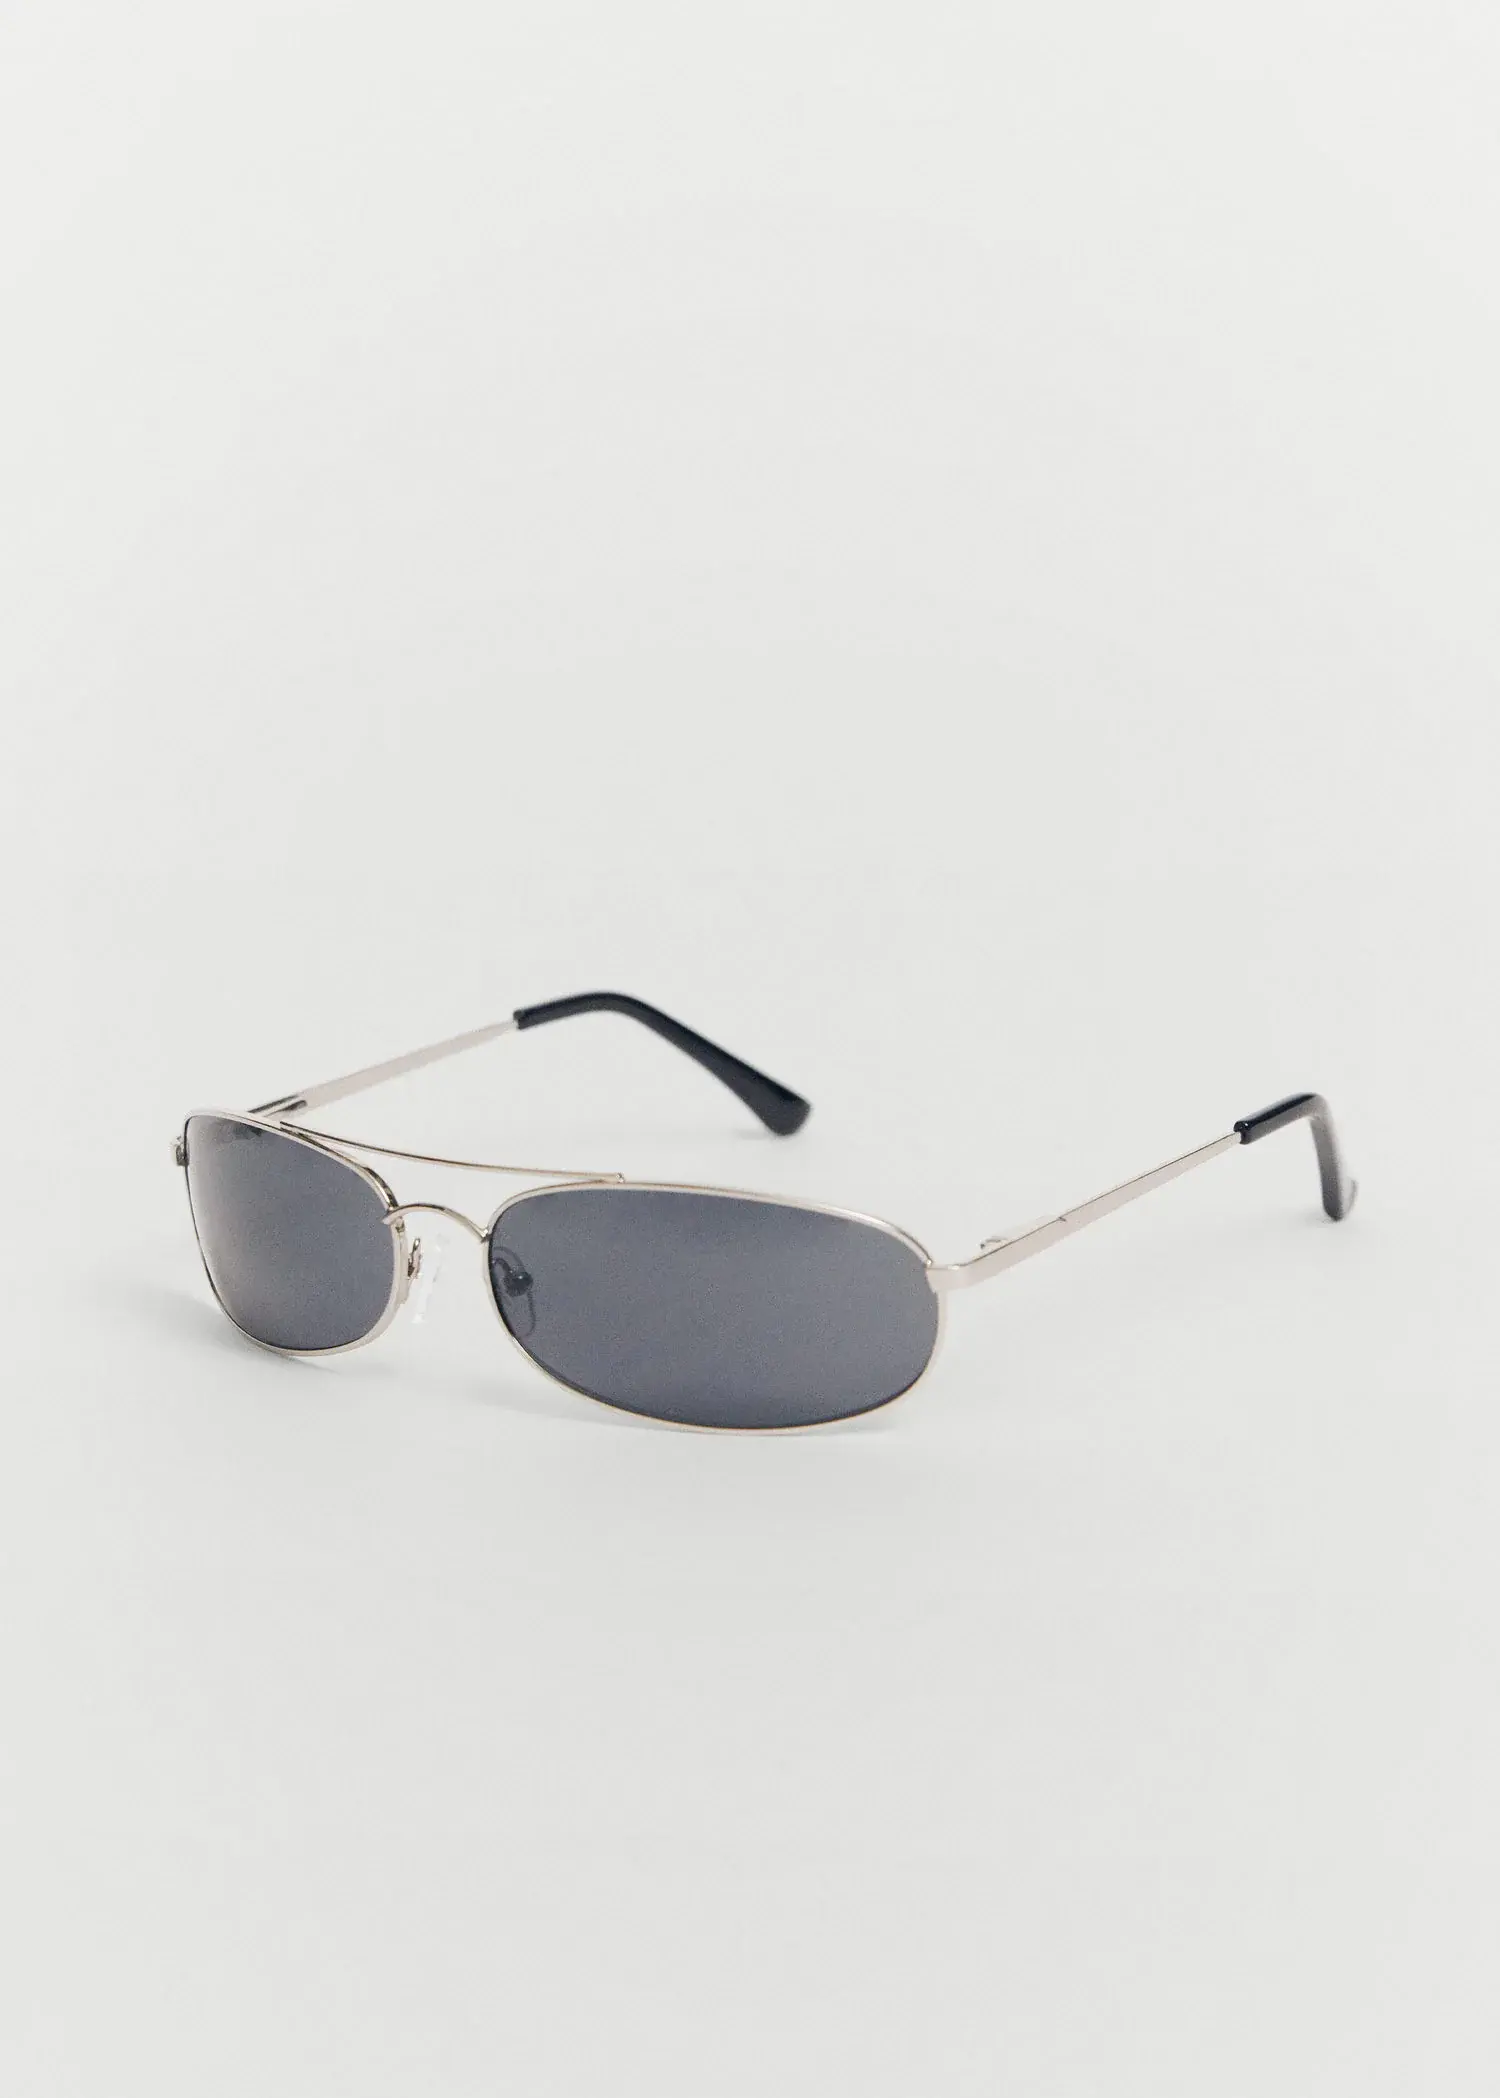 Mango Metallic frame sunglasses. 2